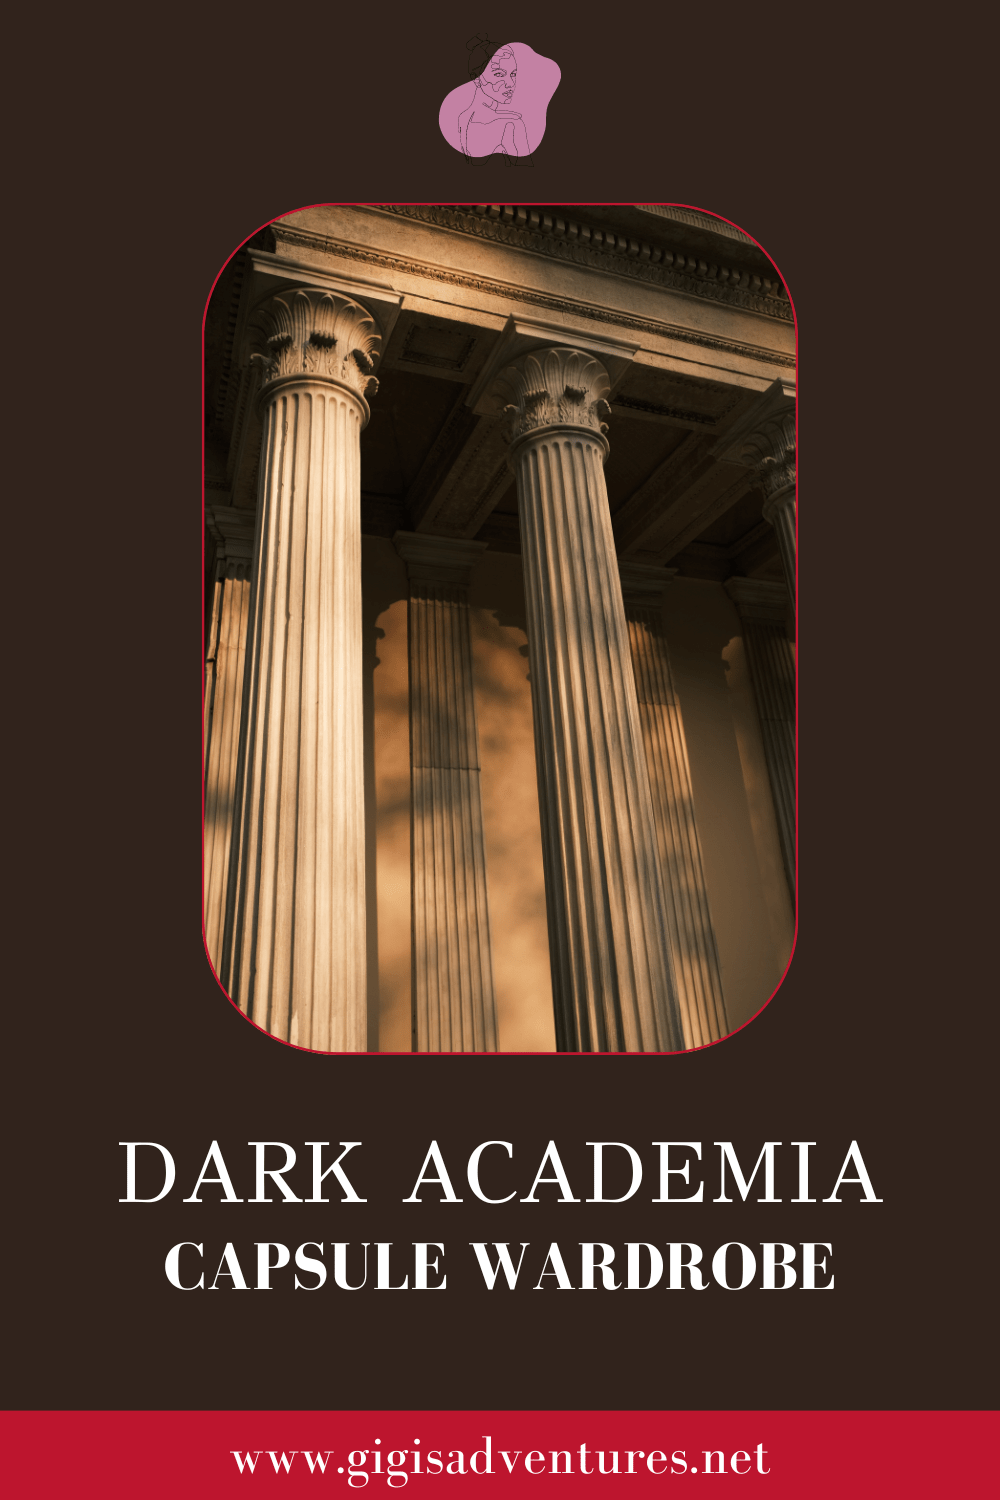 dark academia, dark academia aesthetic, dark academia fashion, dark academia style, dark academia capsule wardrobe